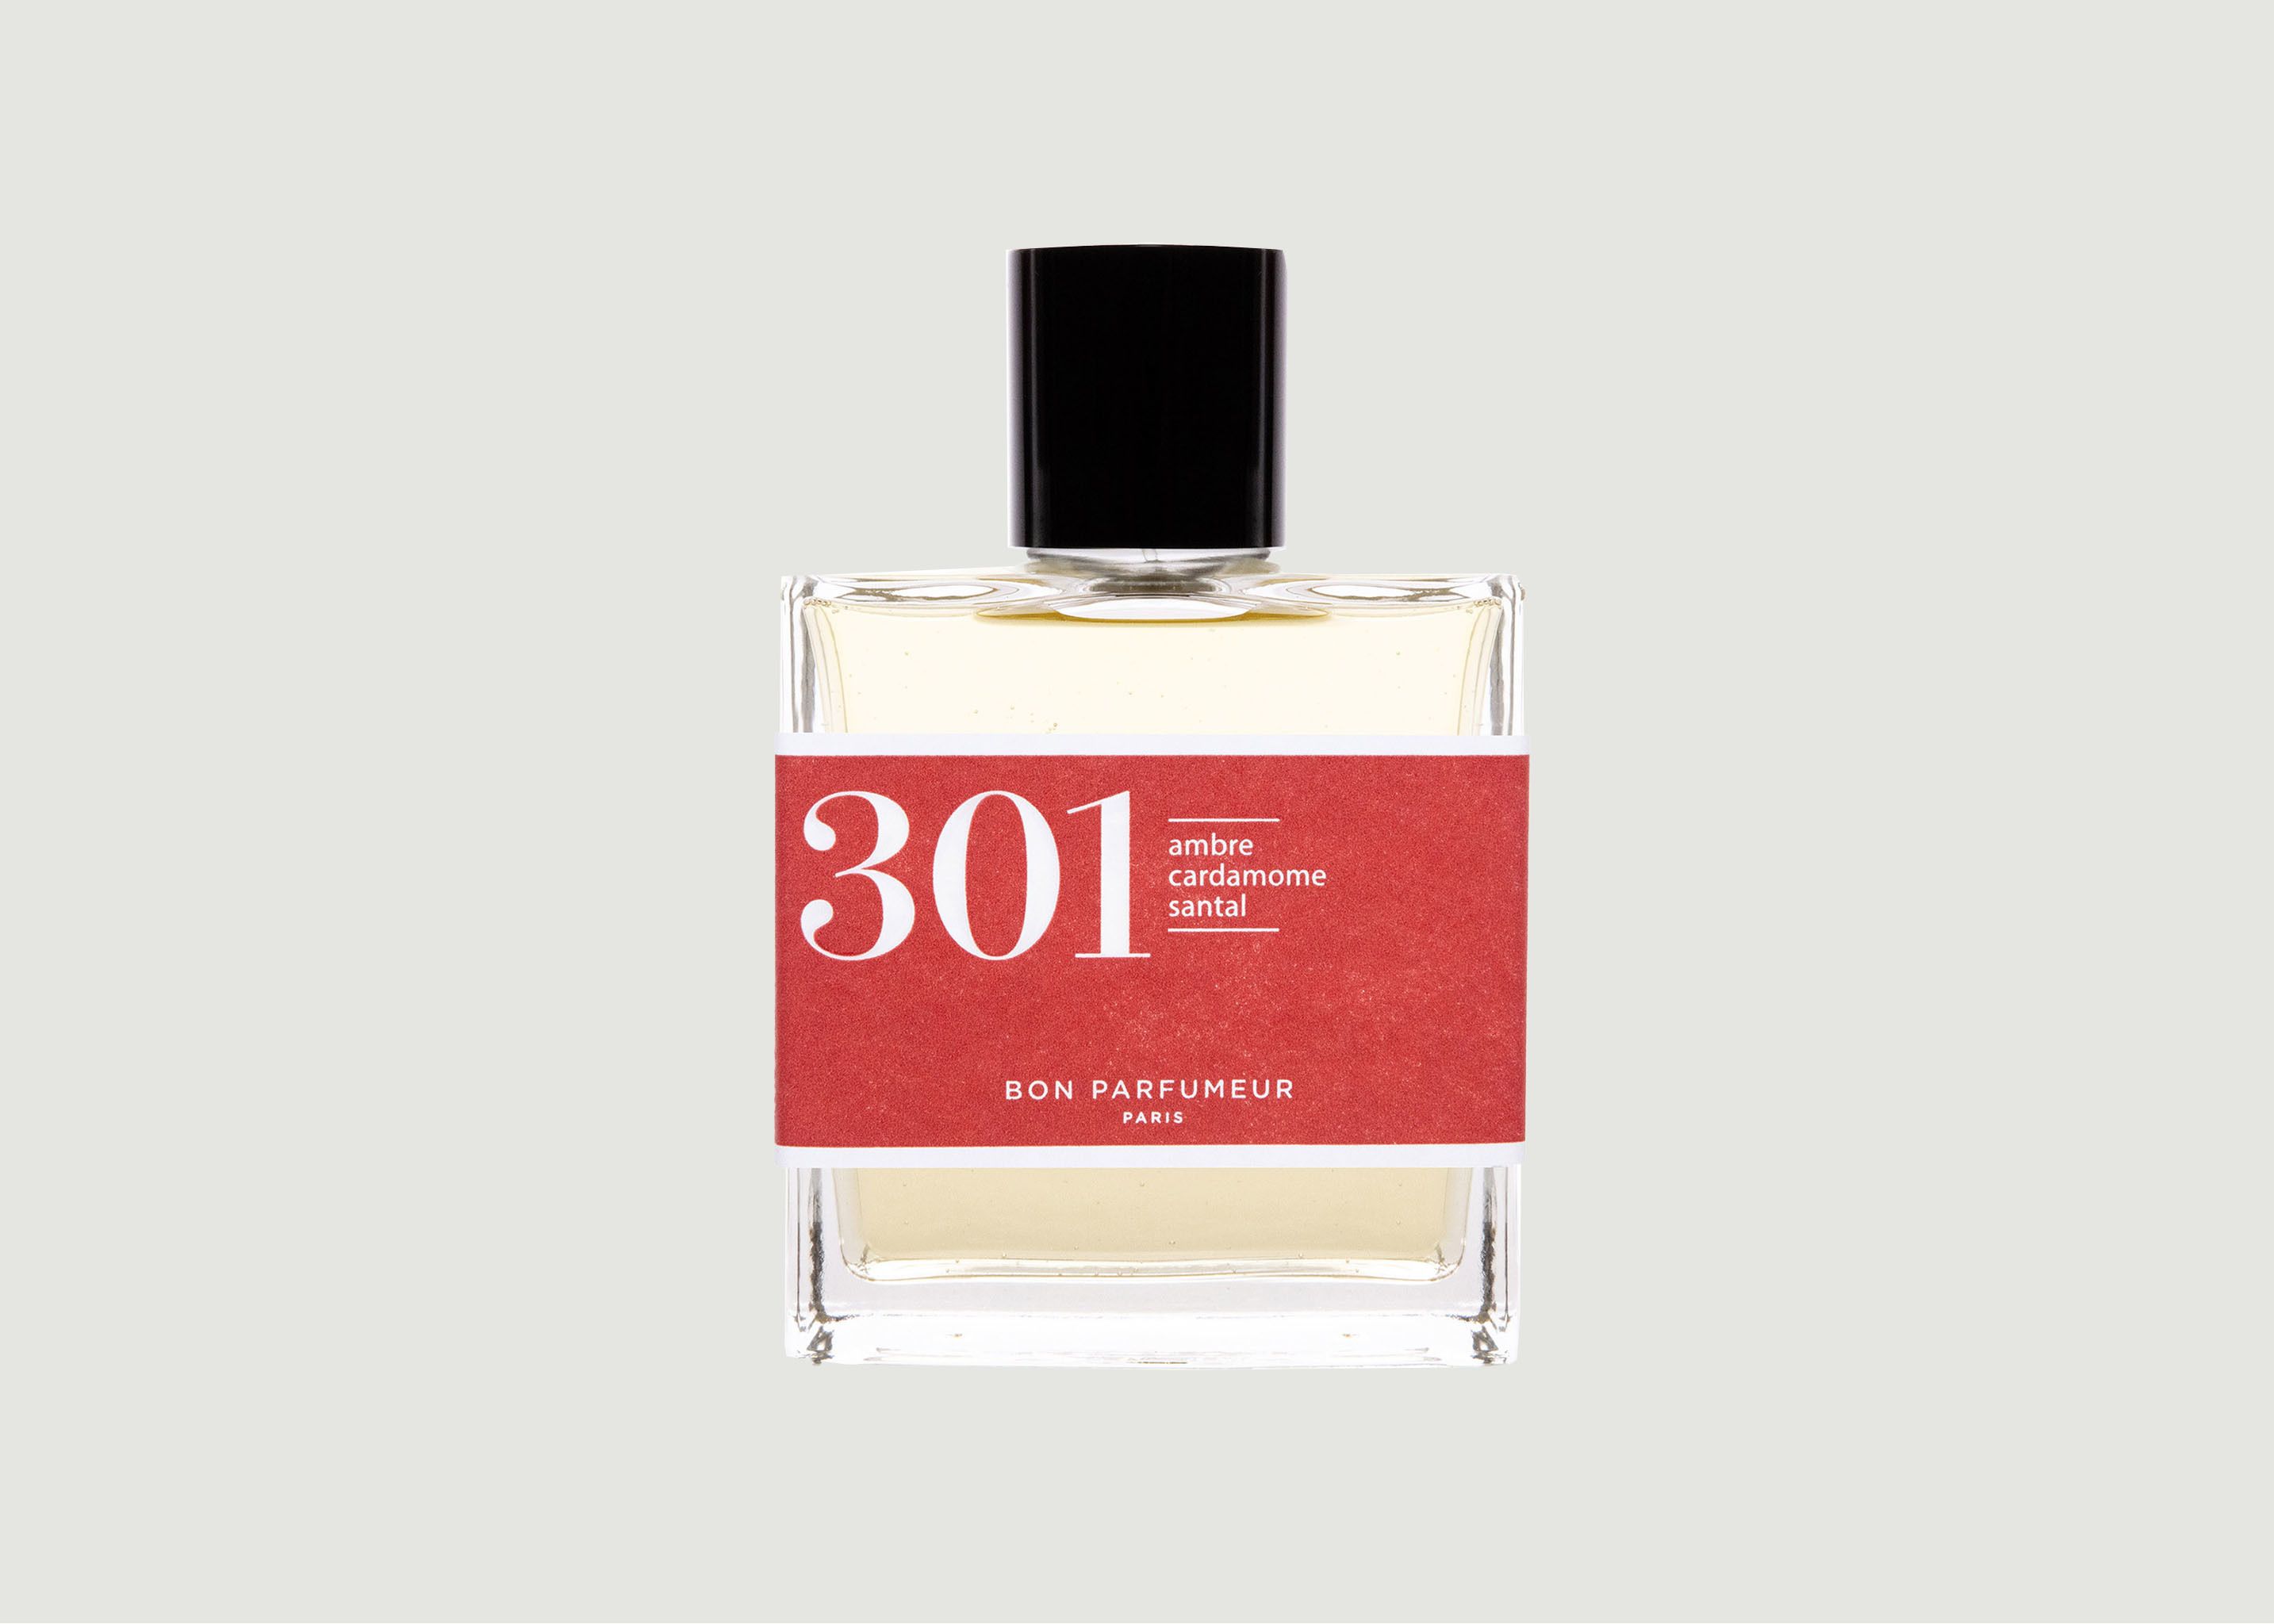 Eau de Parfum 301: Sandelhout, Amber, Kardemom - Bon Parfumeur